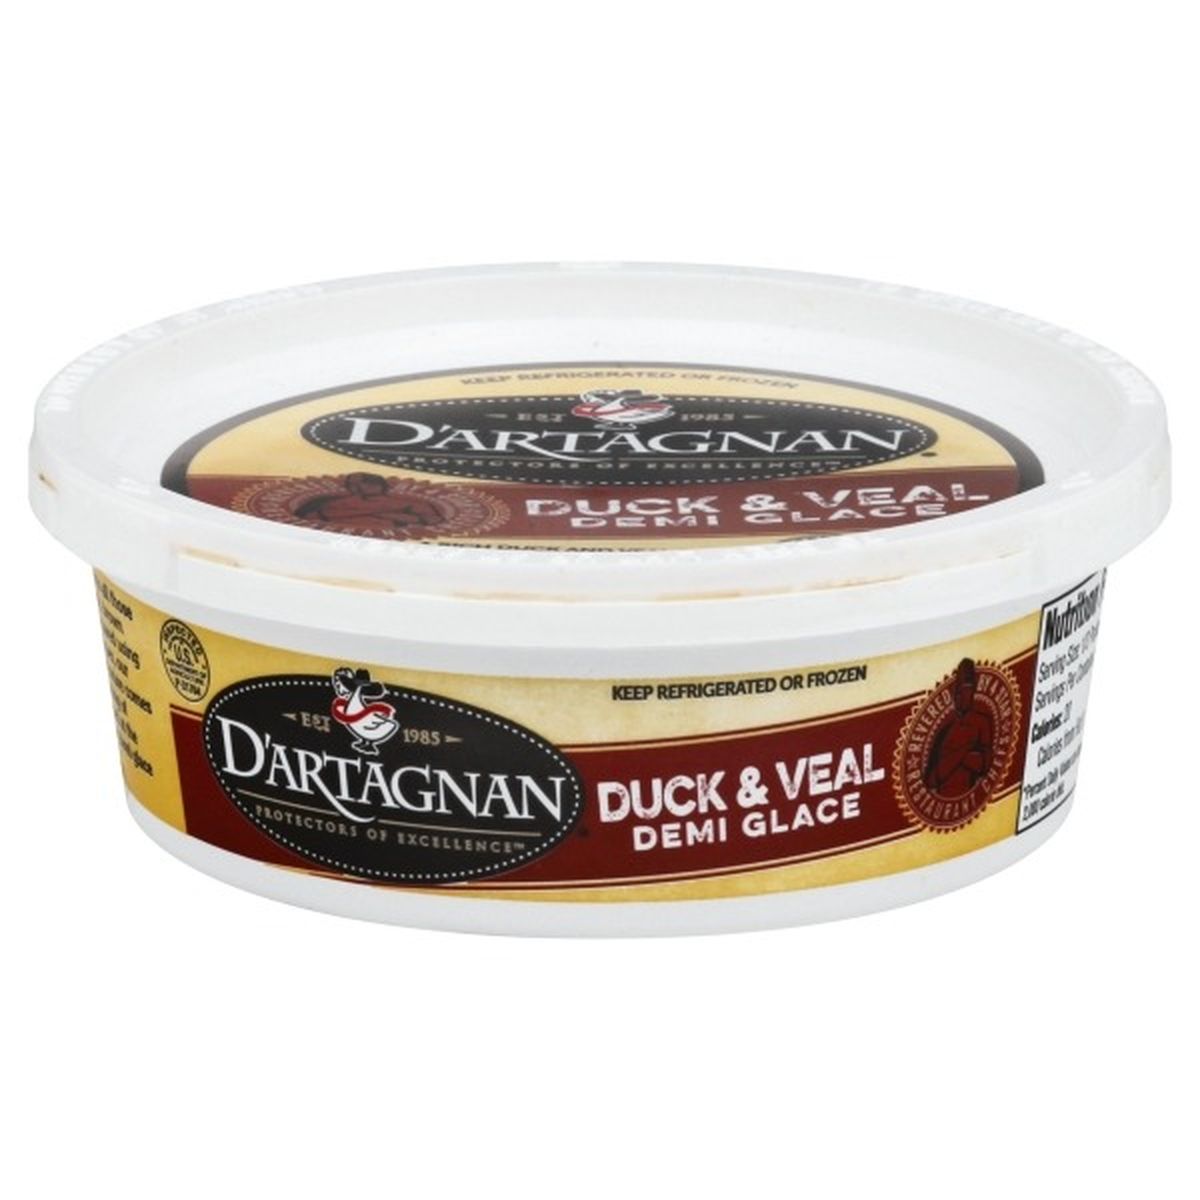 Calories in DArtagnan Demi Glace, Duck & Veal